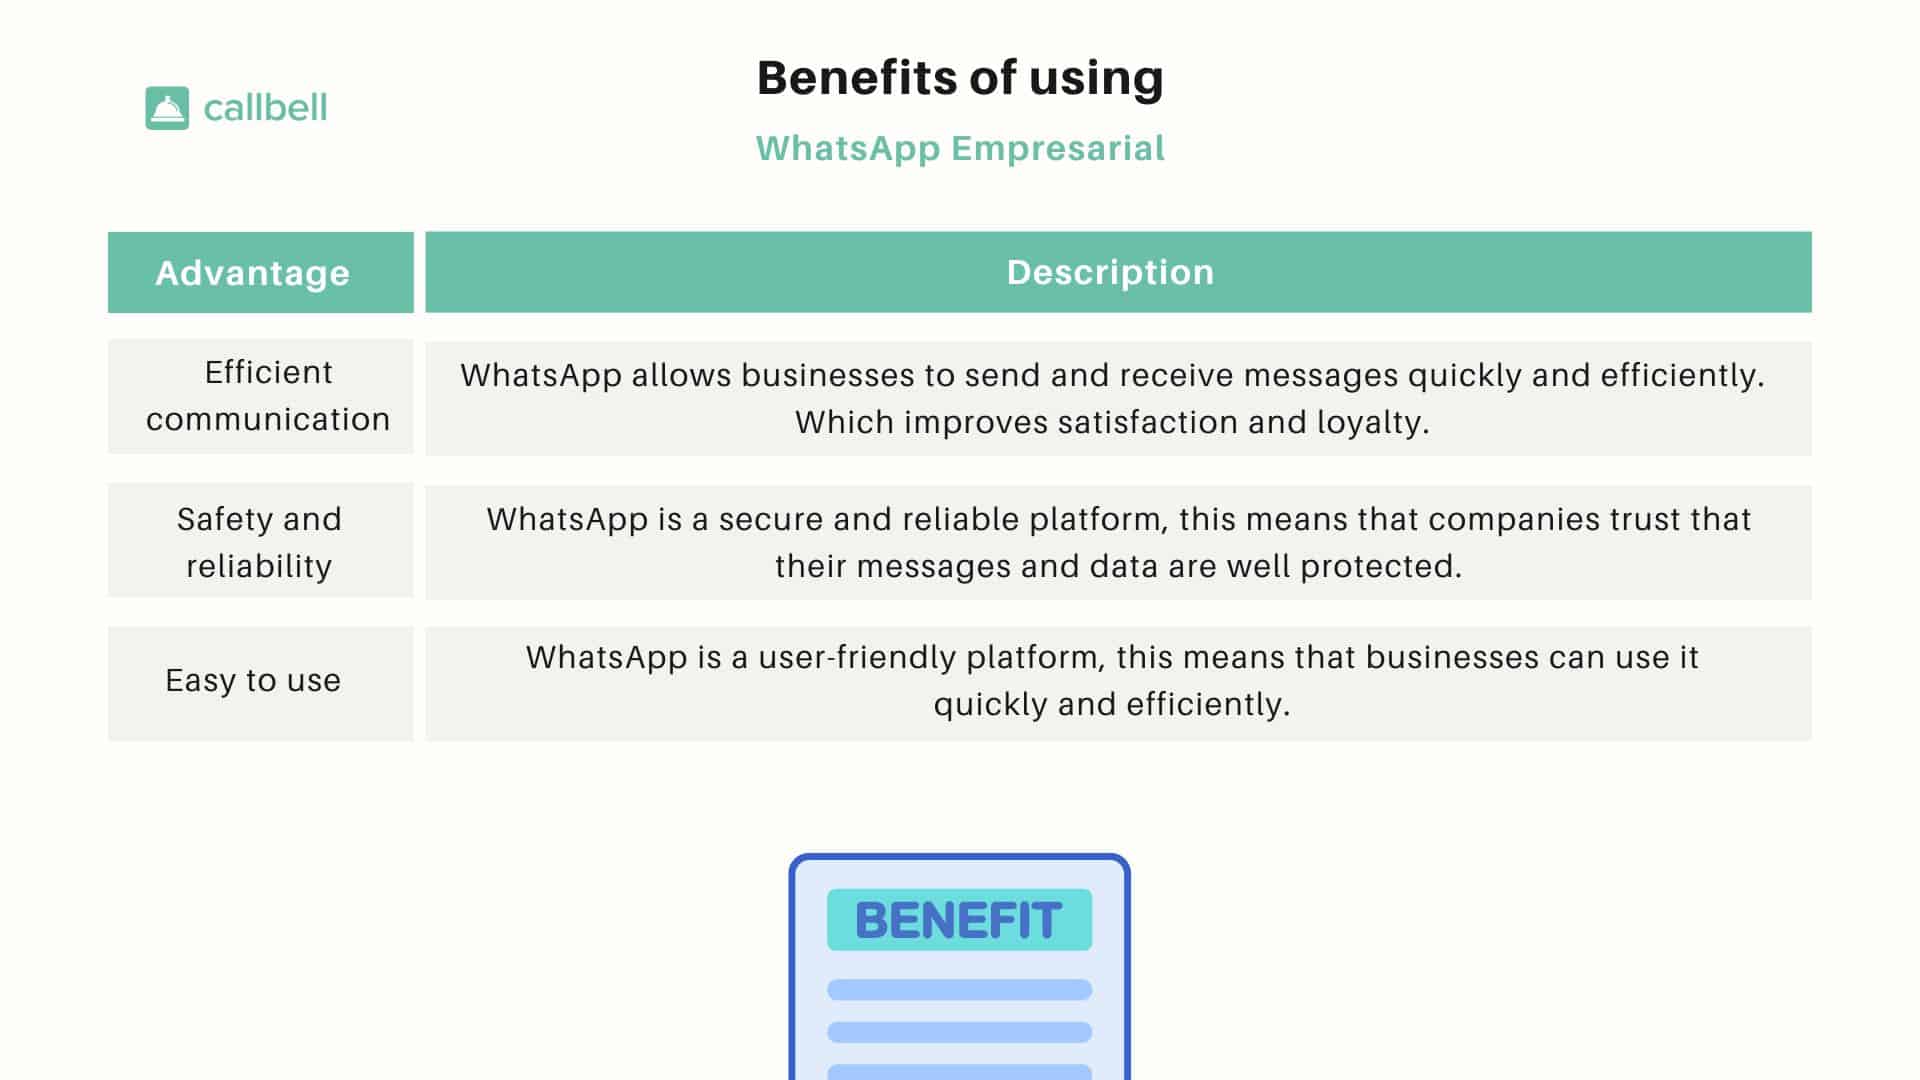 WhatsApp Empresarial